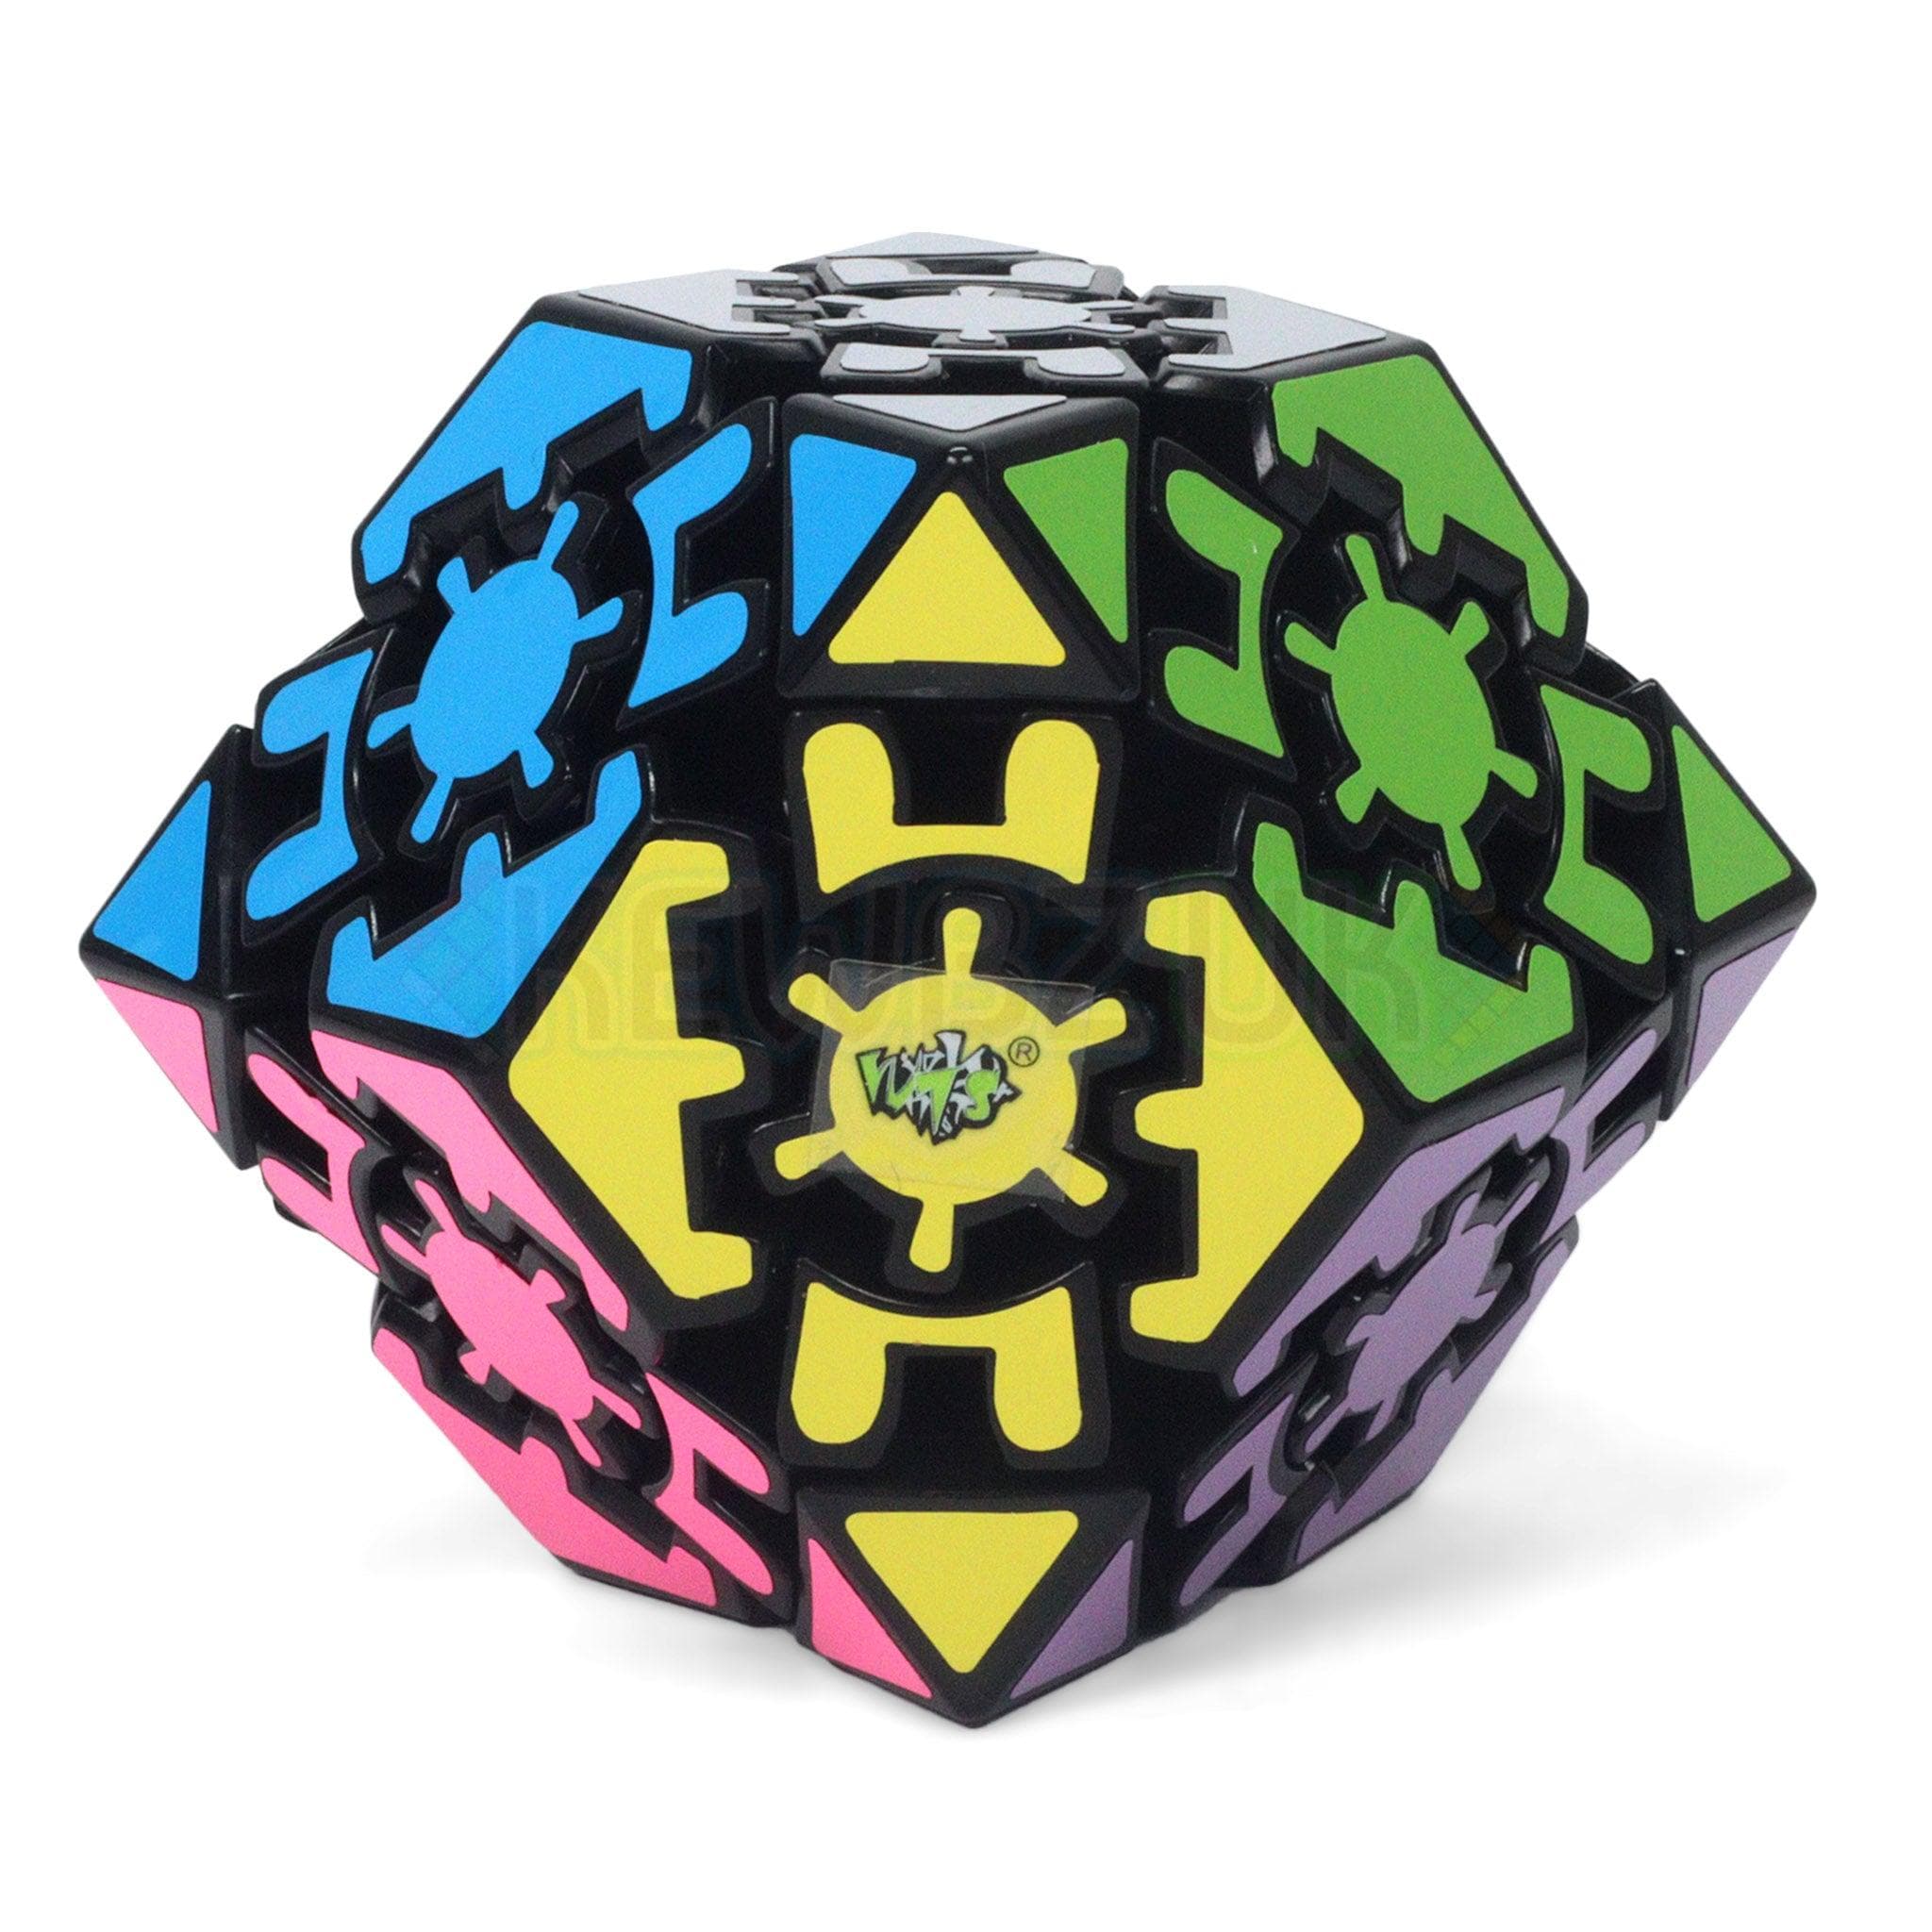 Rubik’s Cube Gear Octahedron